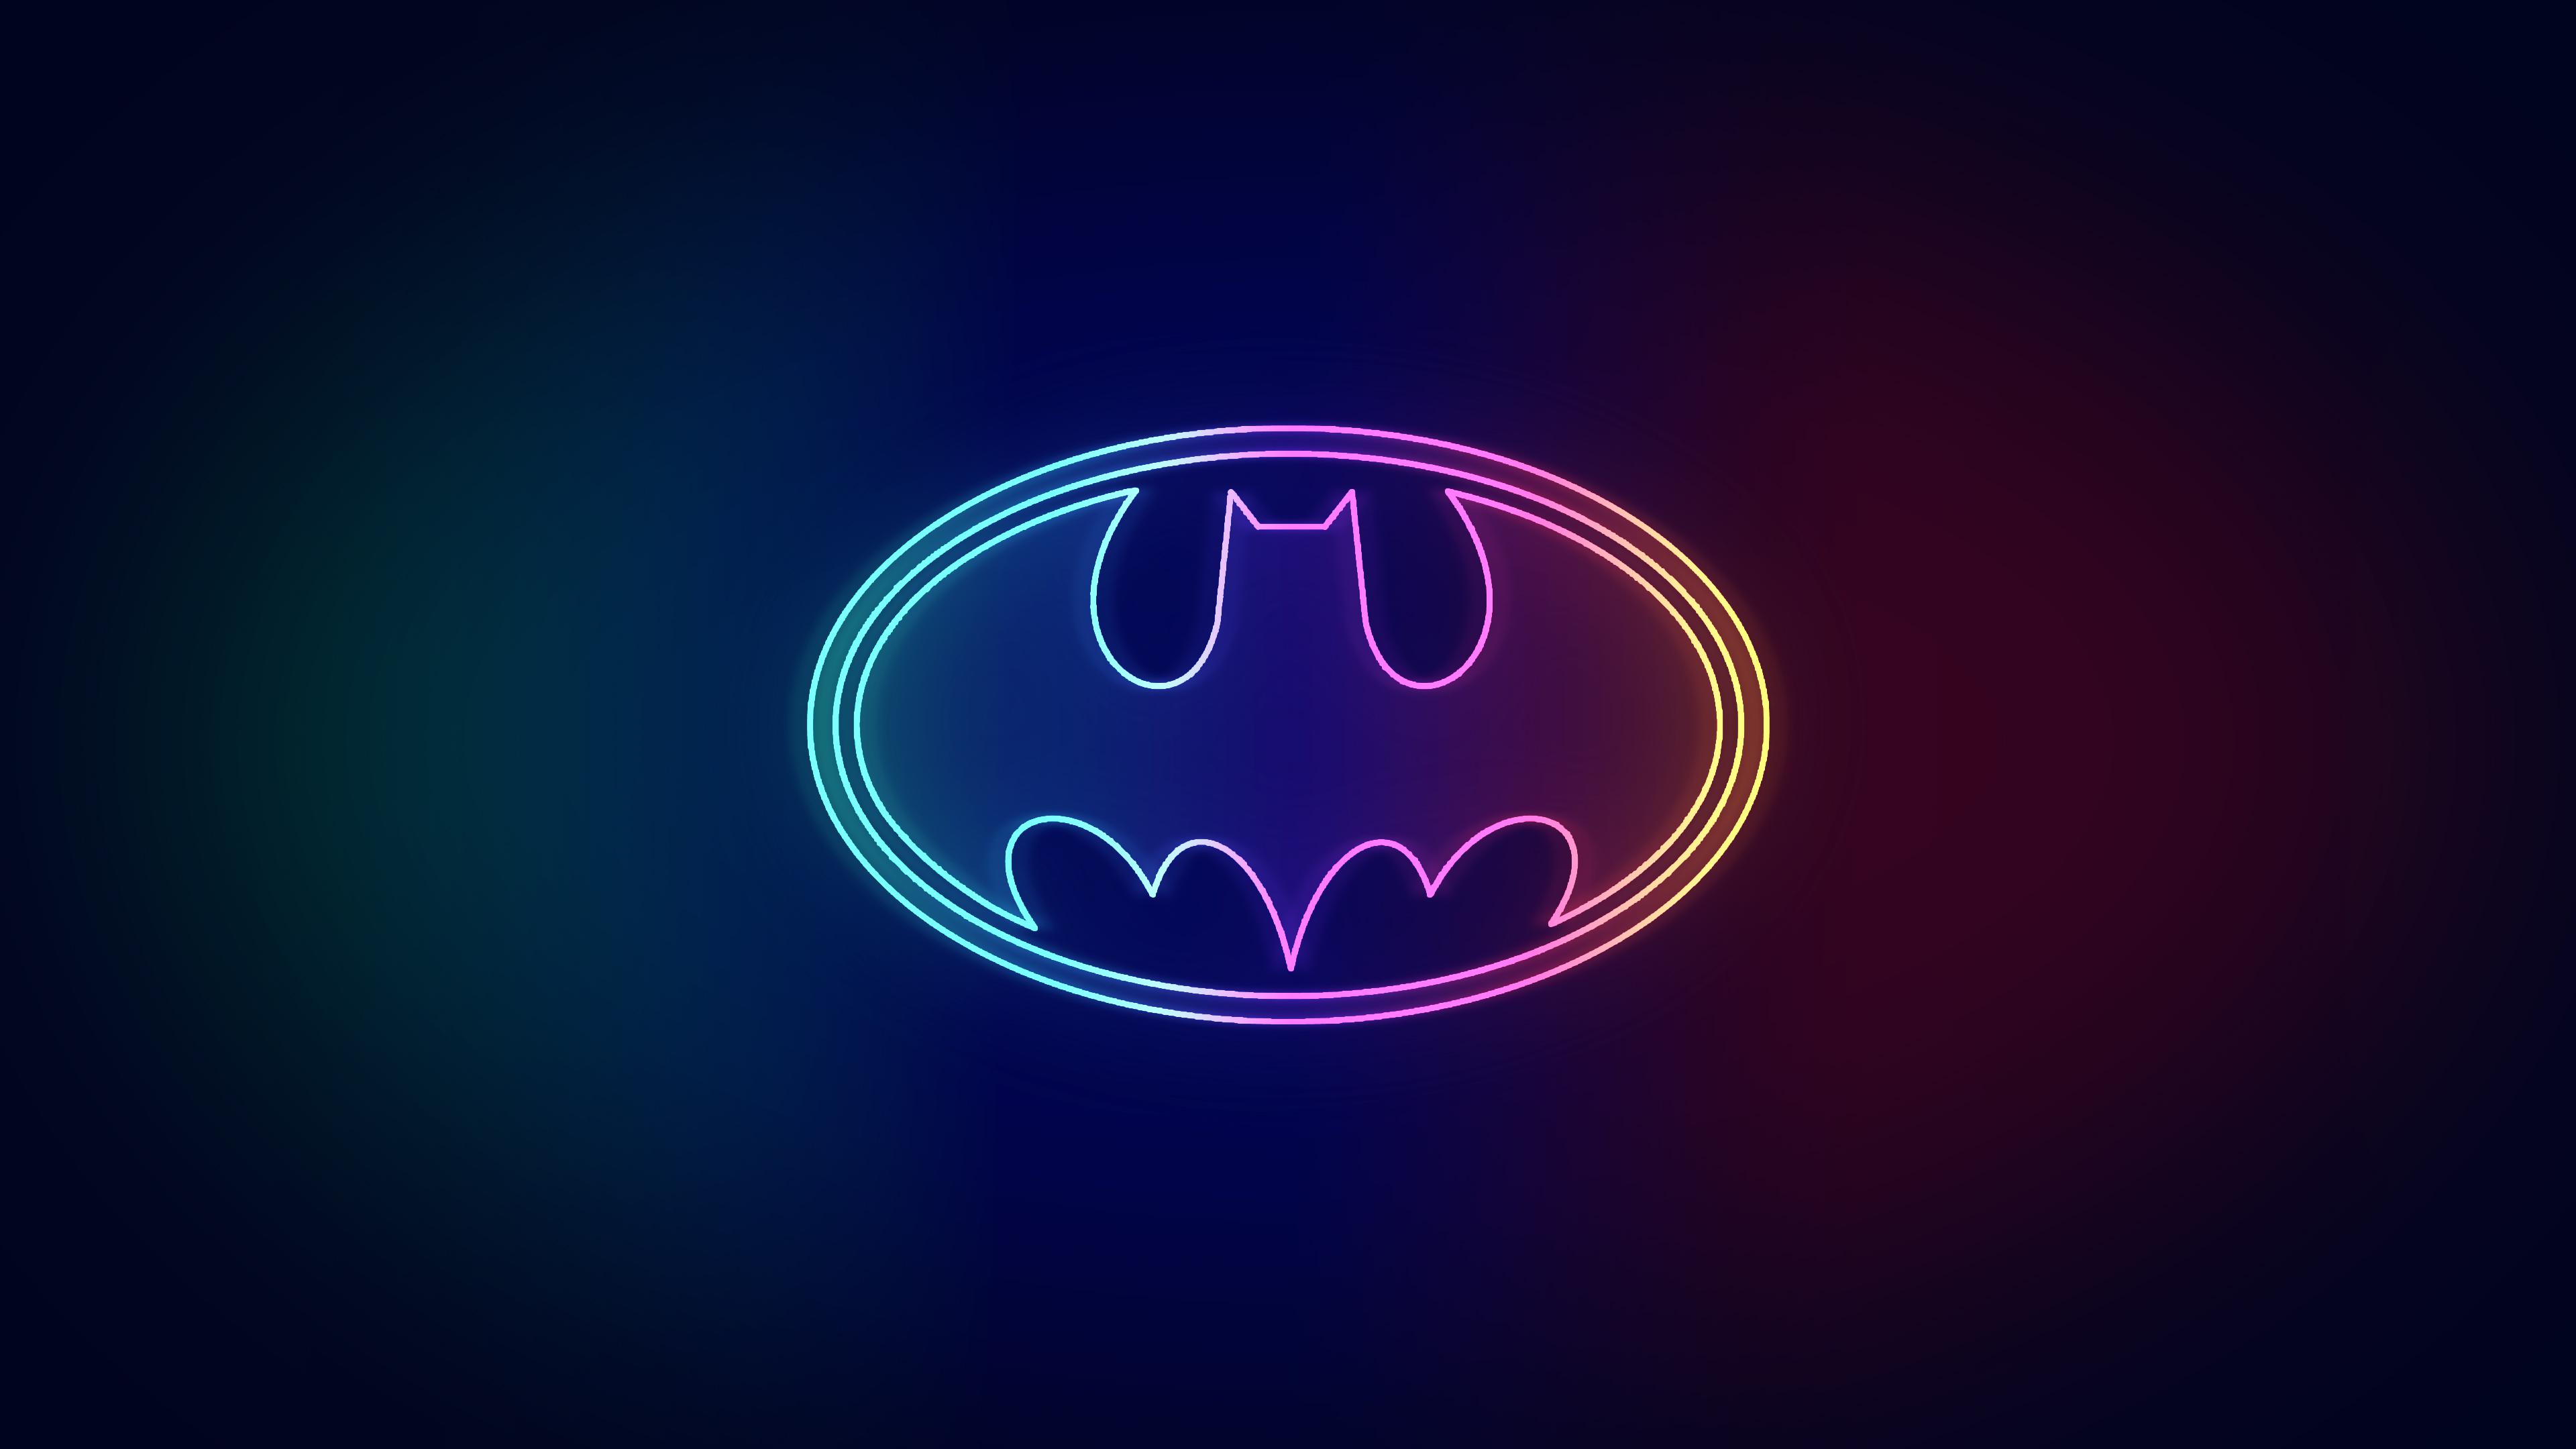 Neon Batman wallpaper [3840 x 2160]